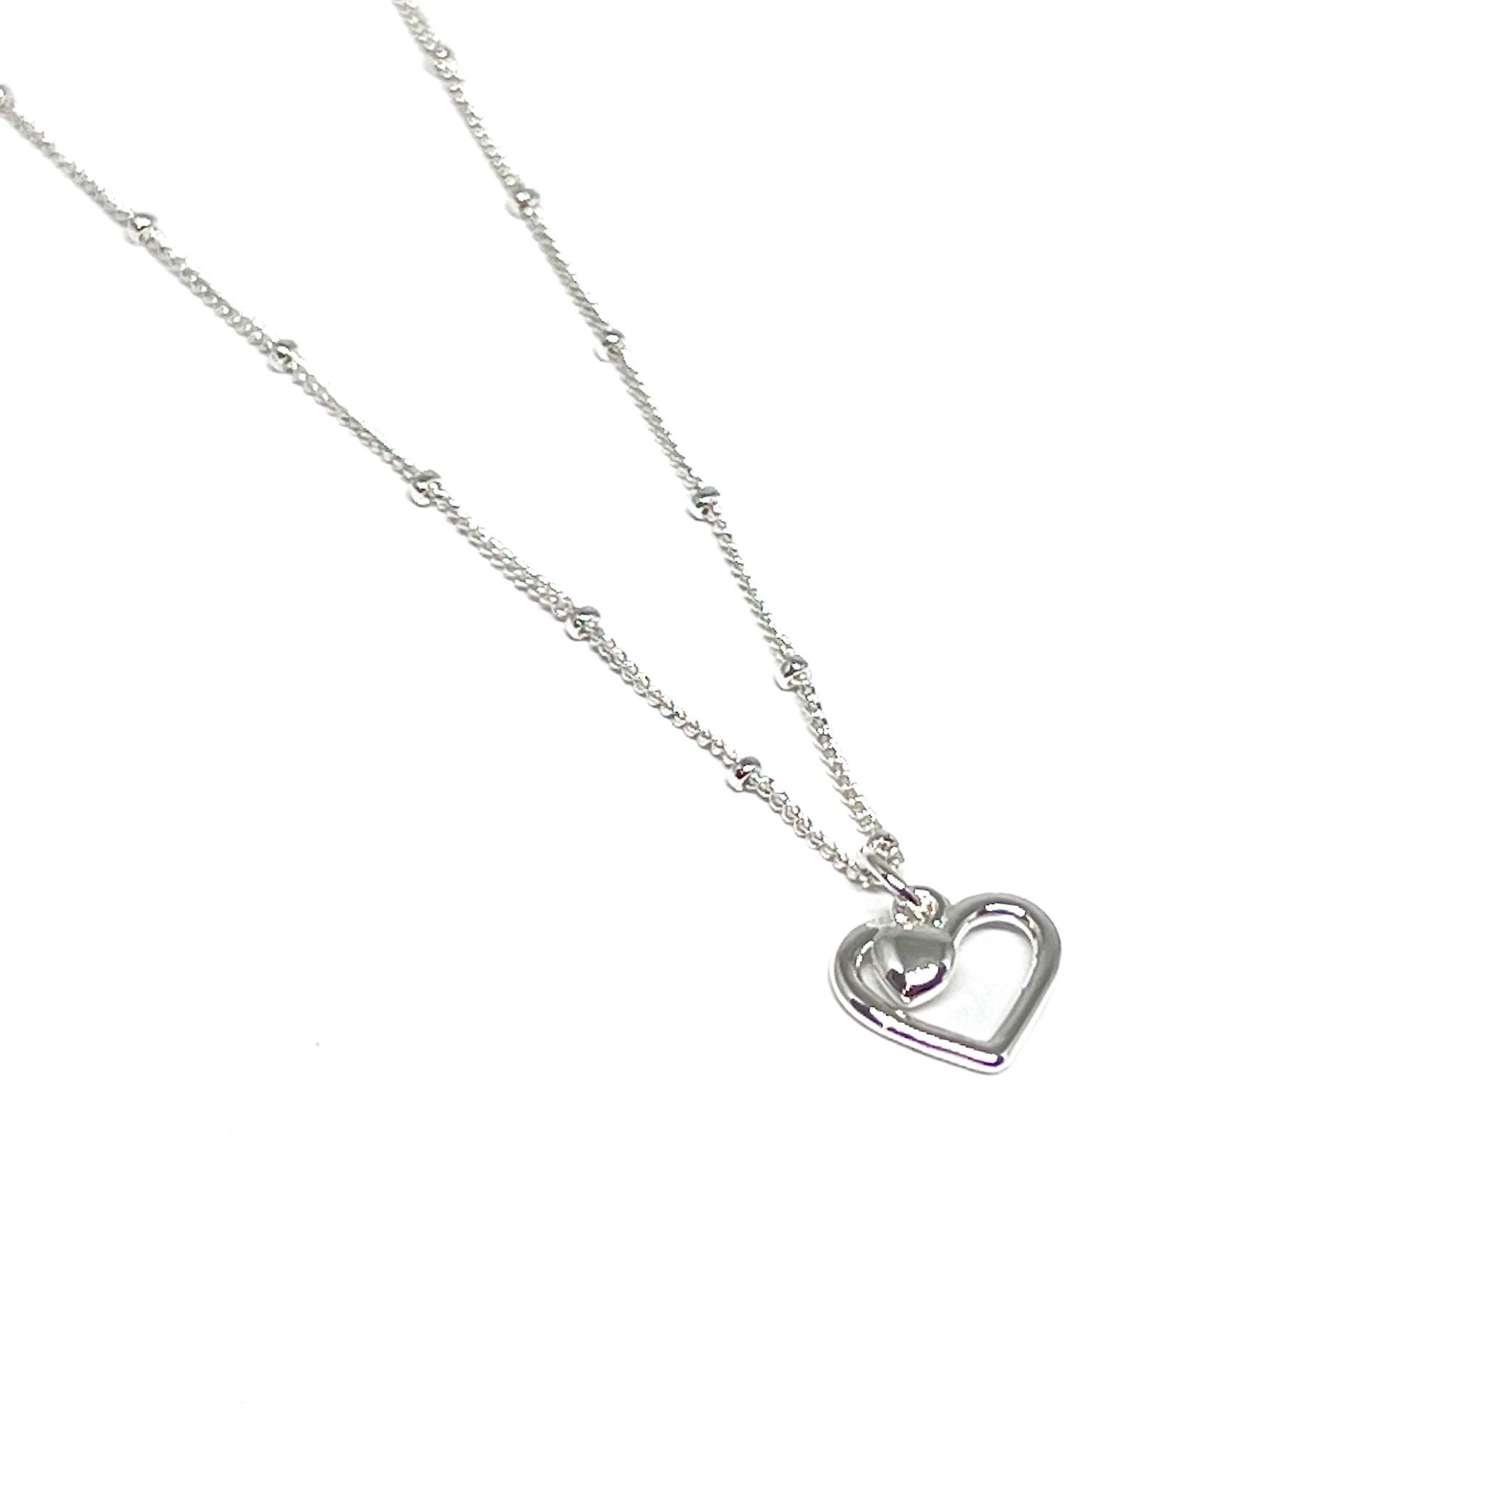 Alba Heart Necklace - Silver